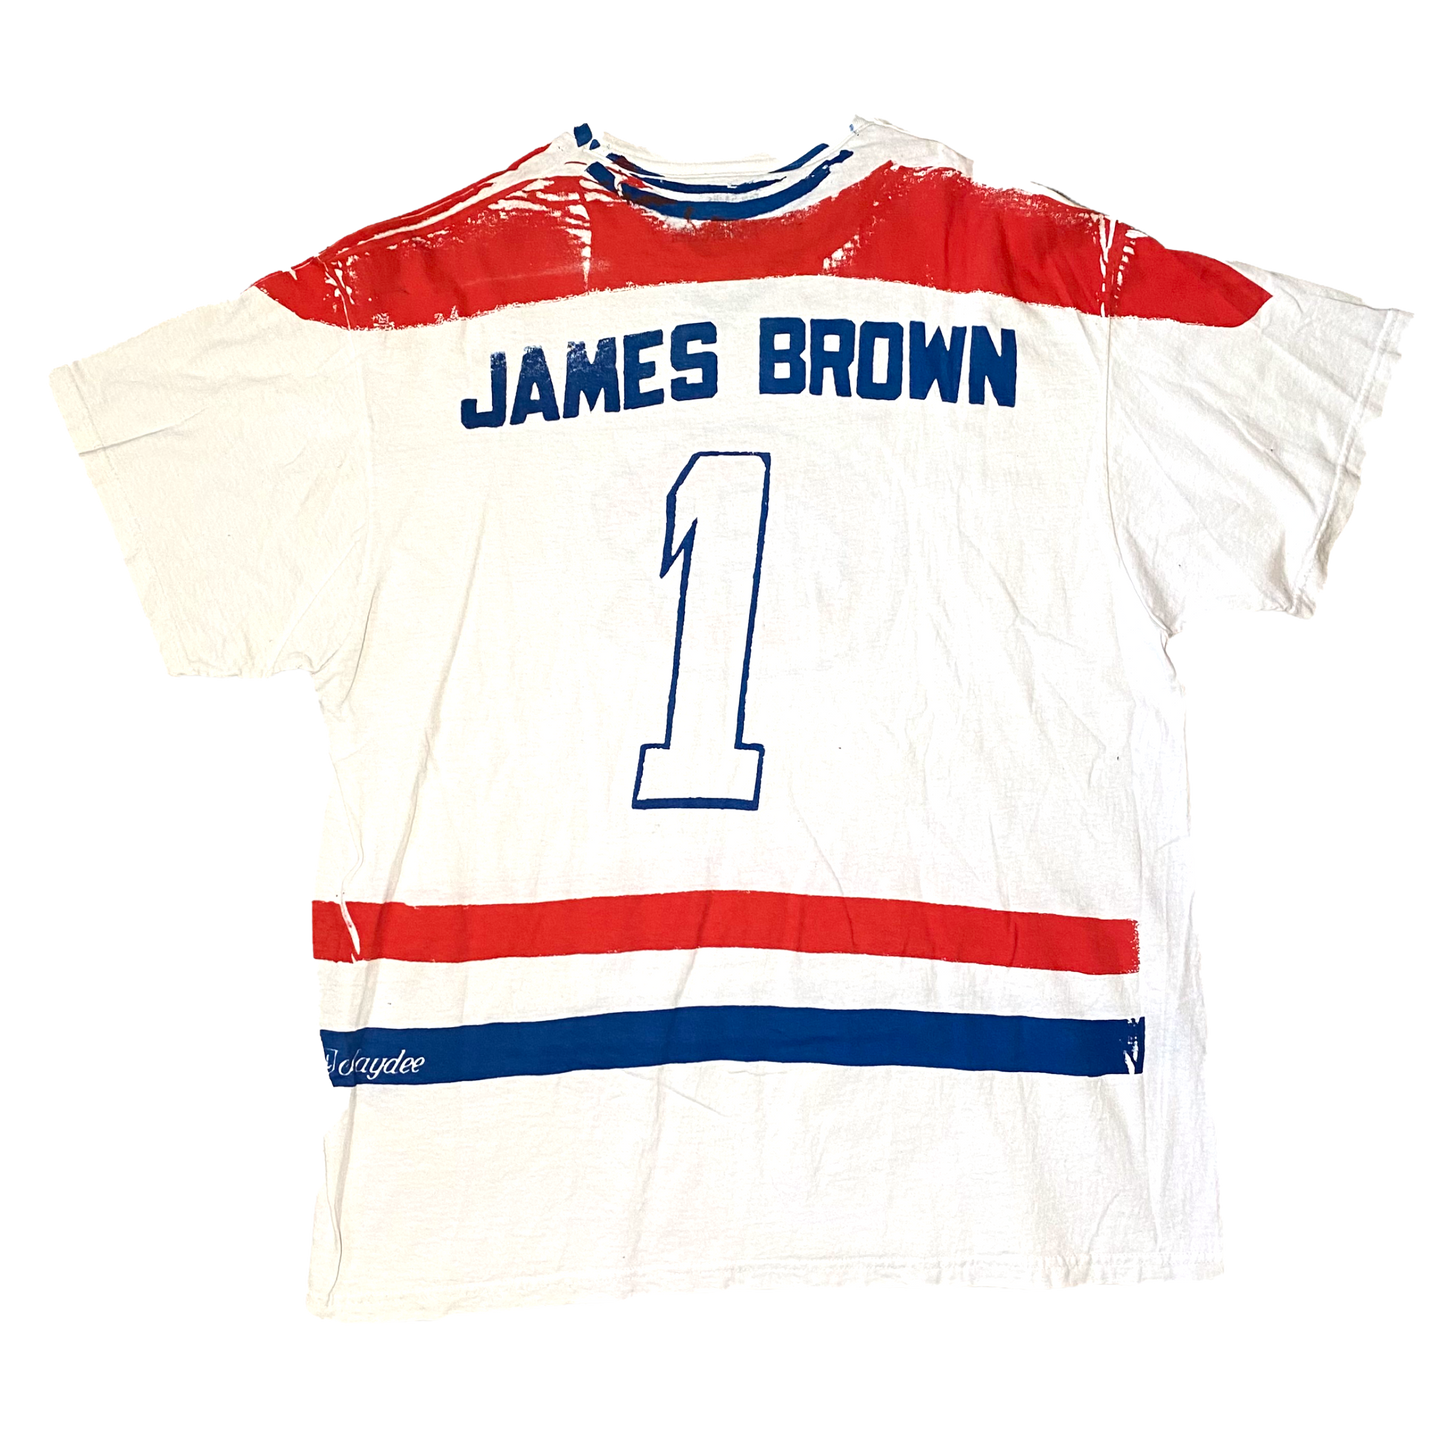 Tom Sach's - 2011 "Work" James Brown Canadiens New York Pop Up T-Shirt